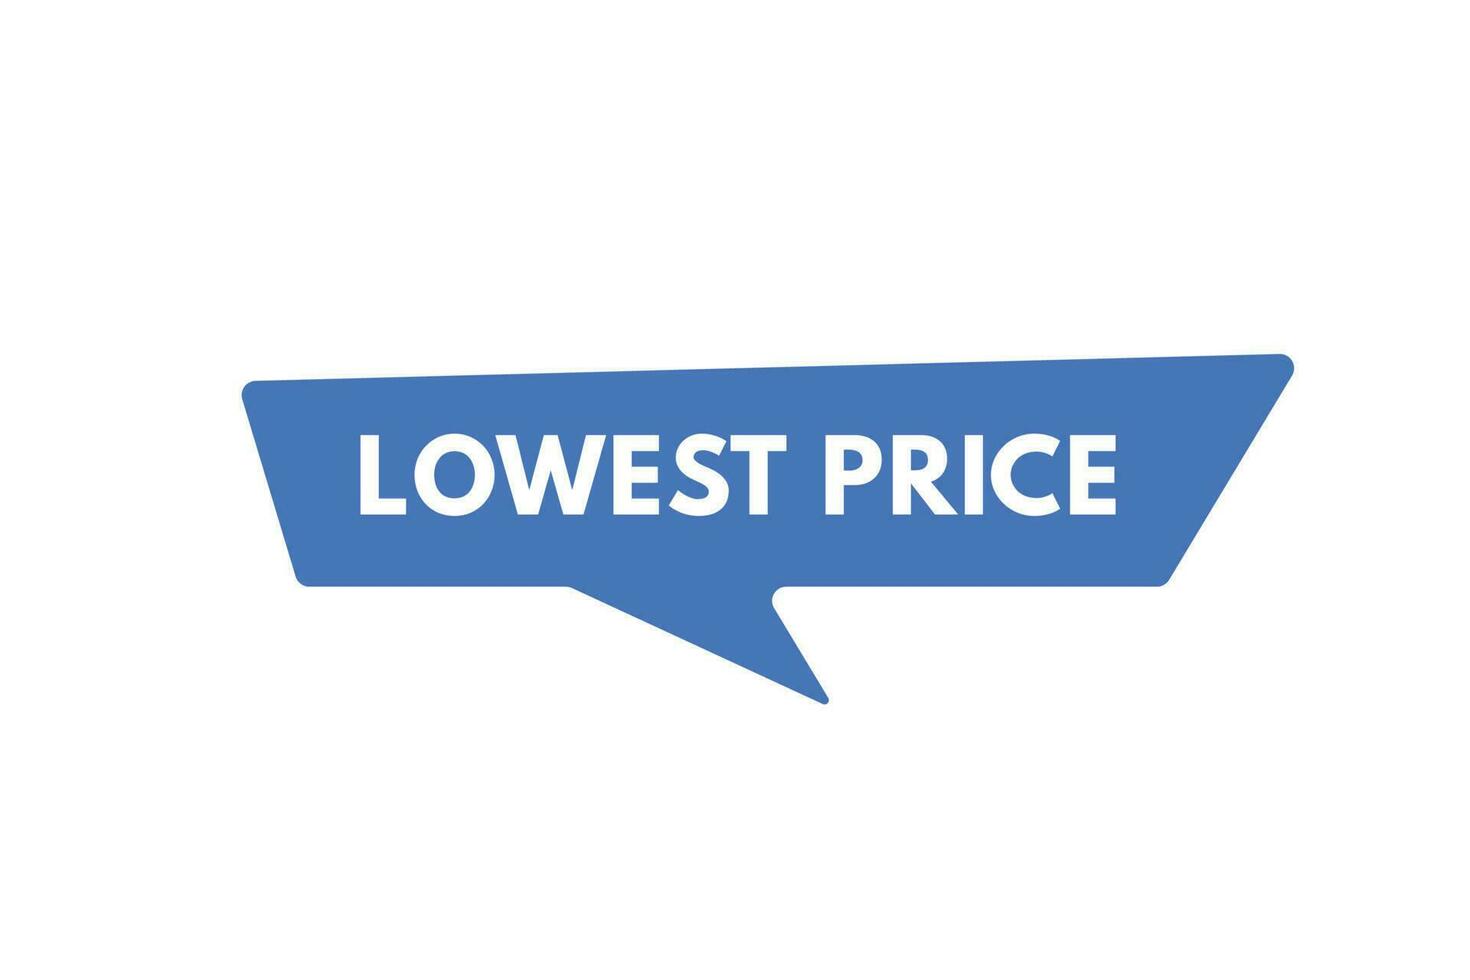  Lowest Price